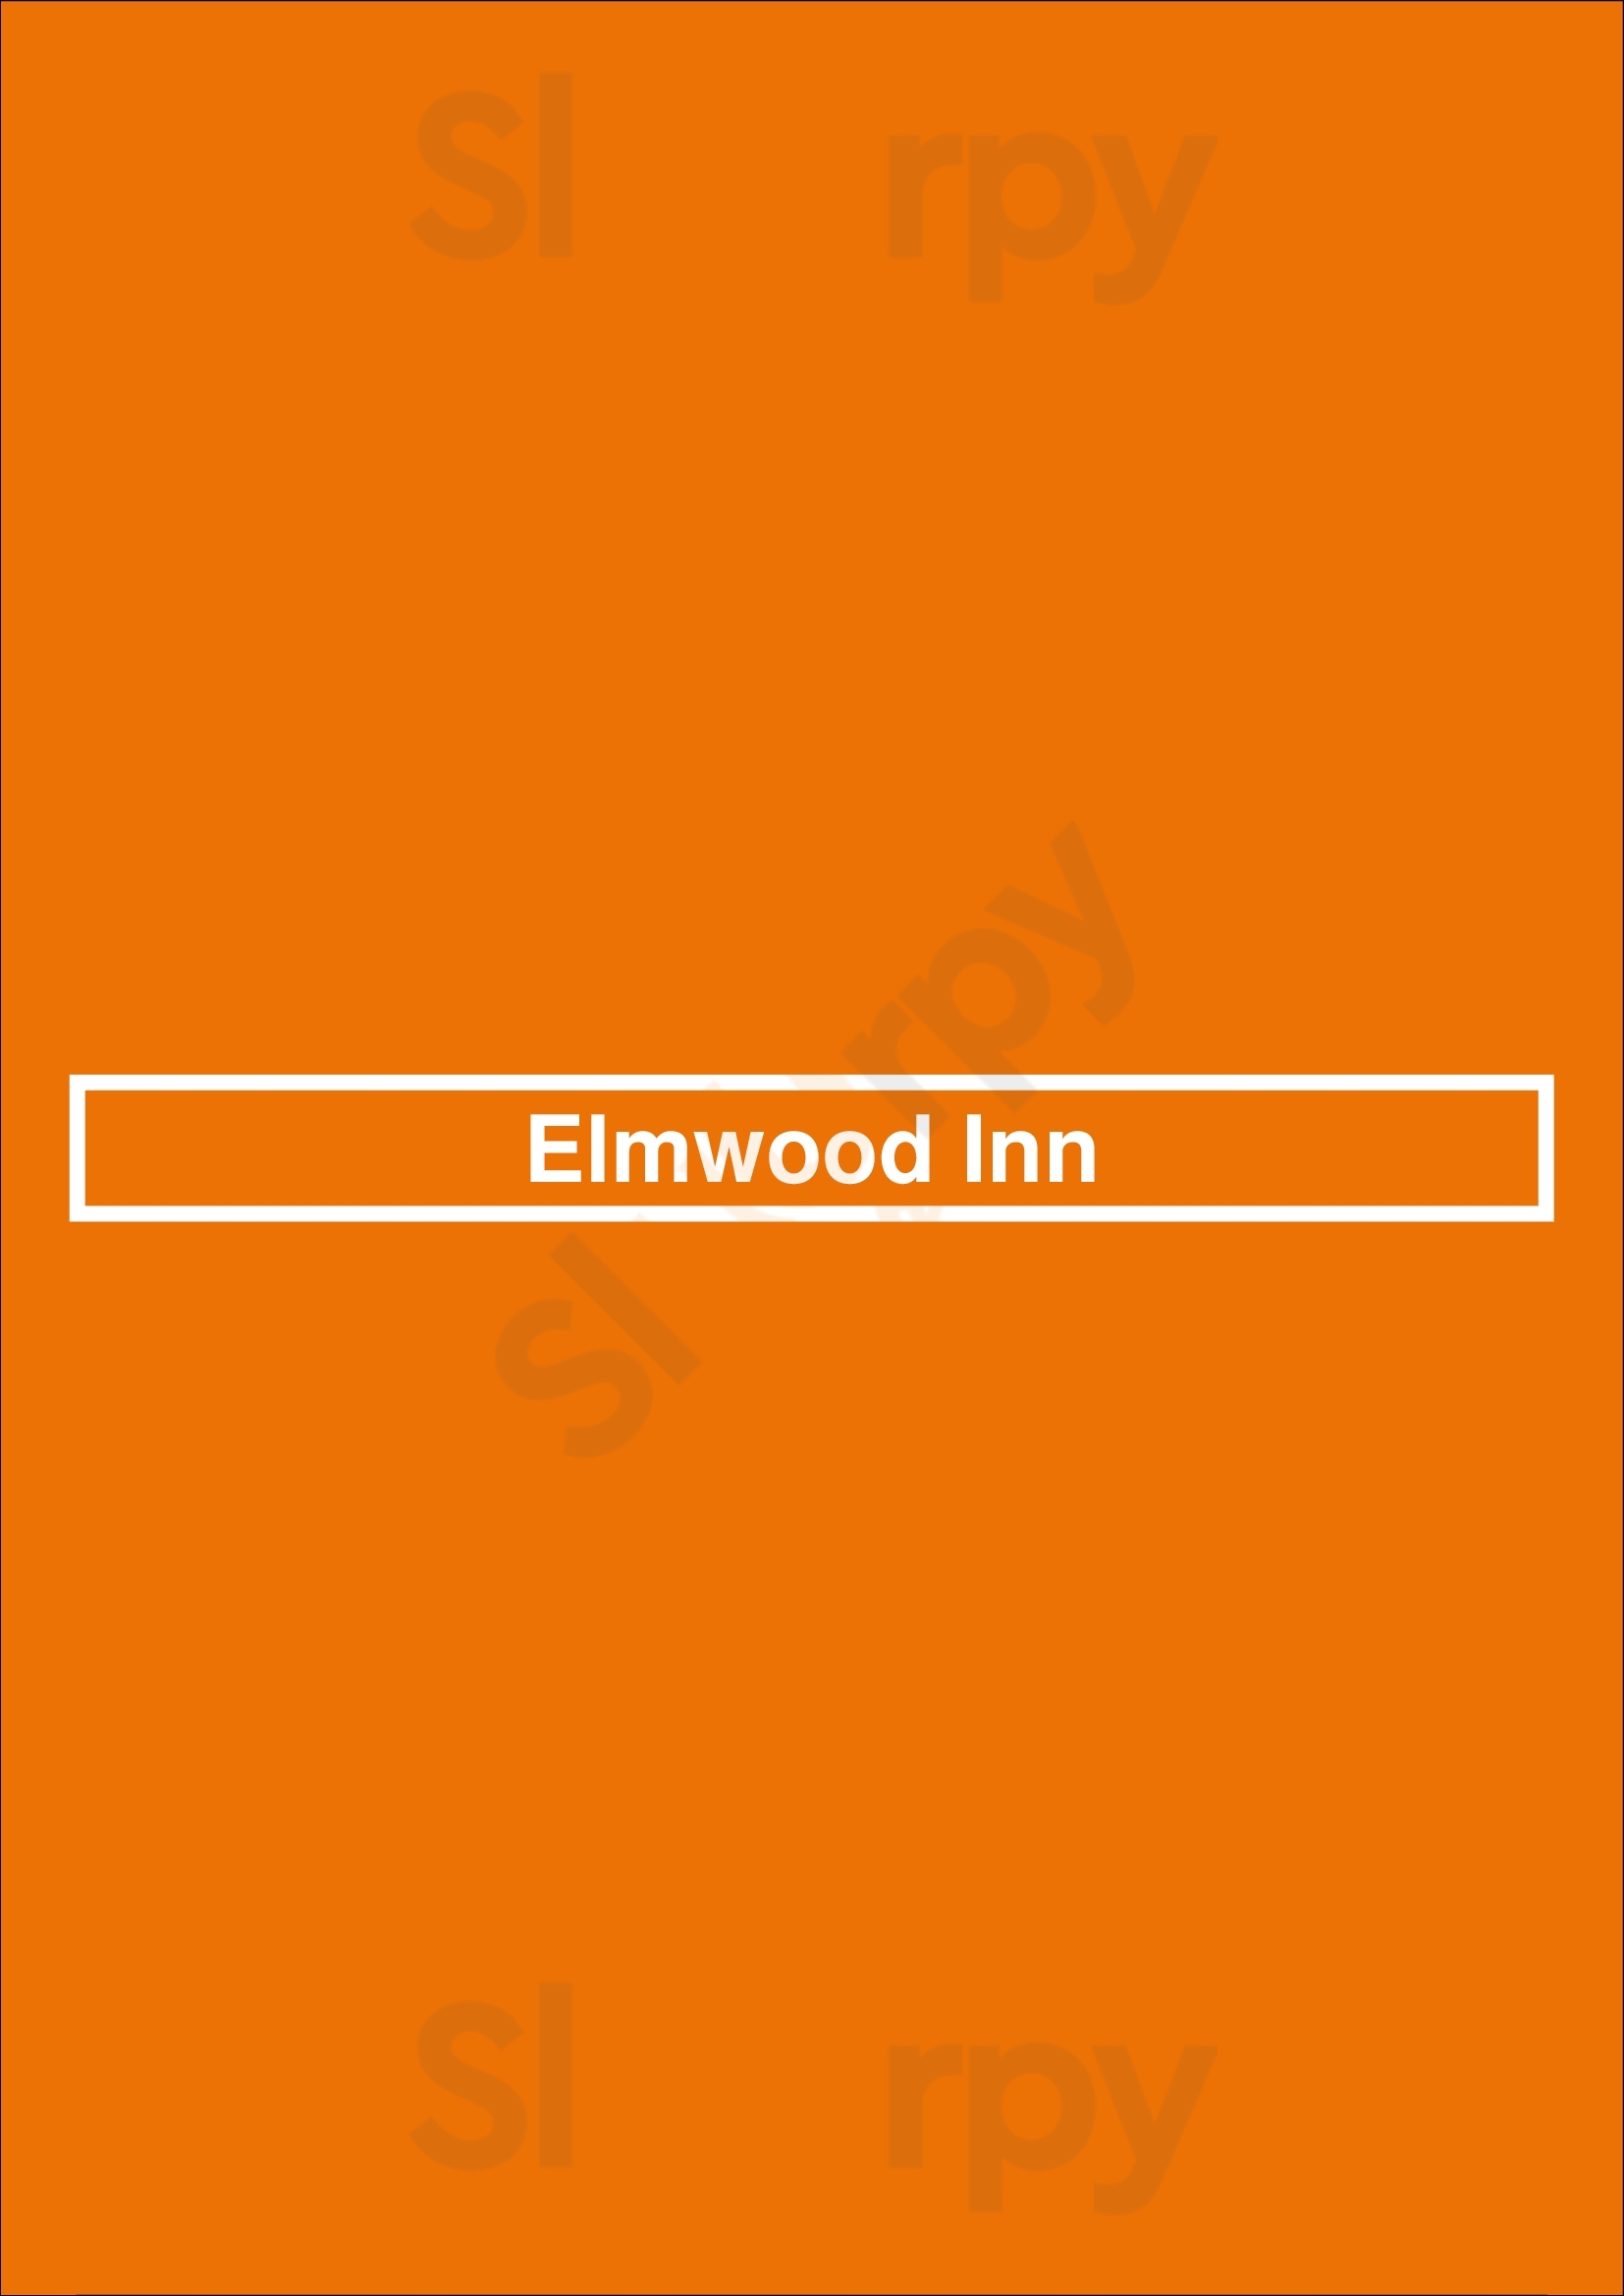 Elmwood Inn Rochester Menu - 1